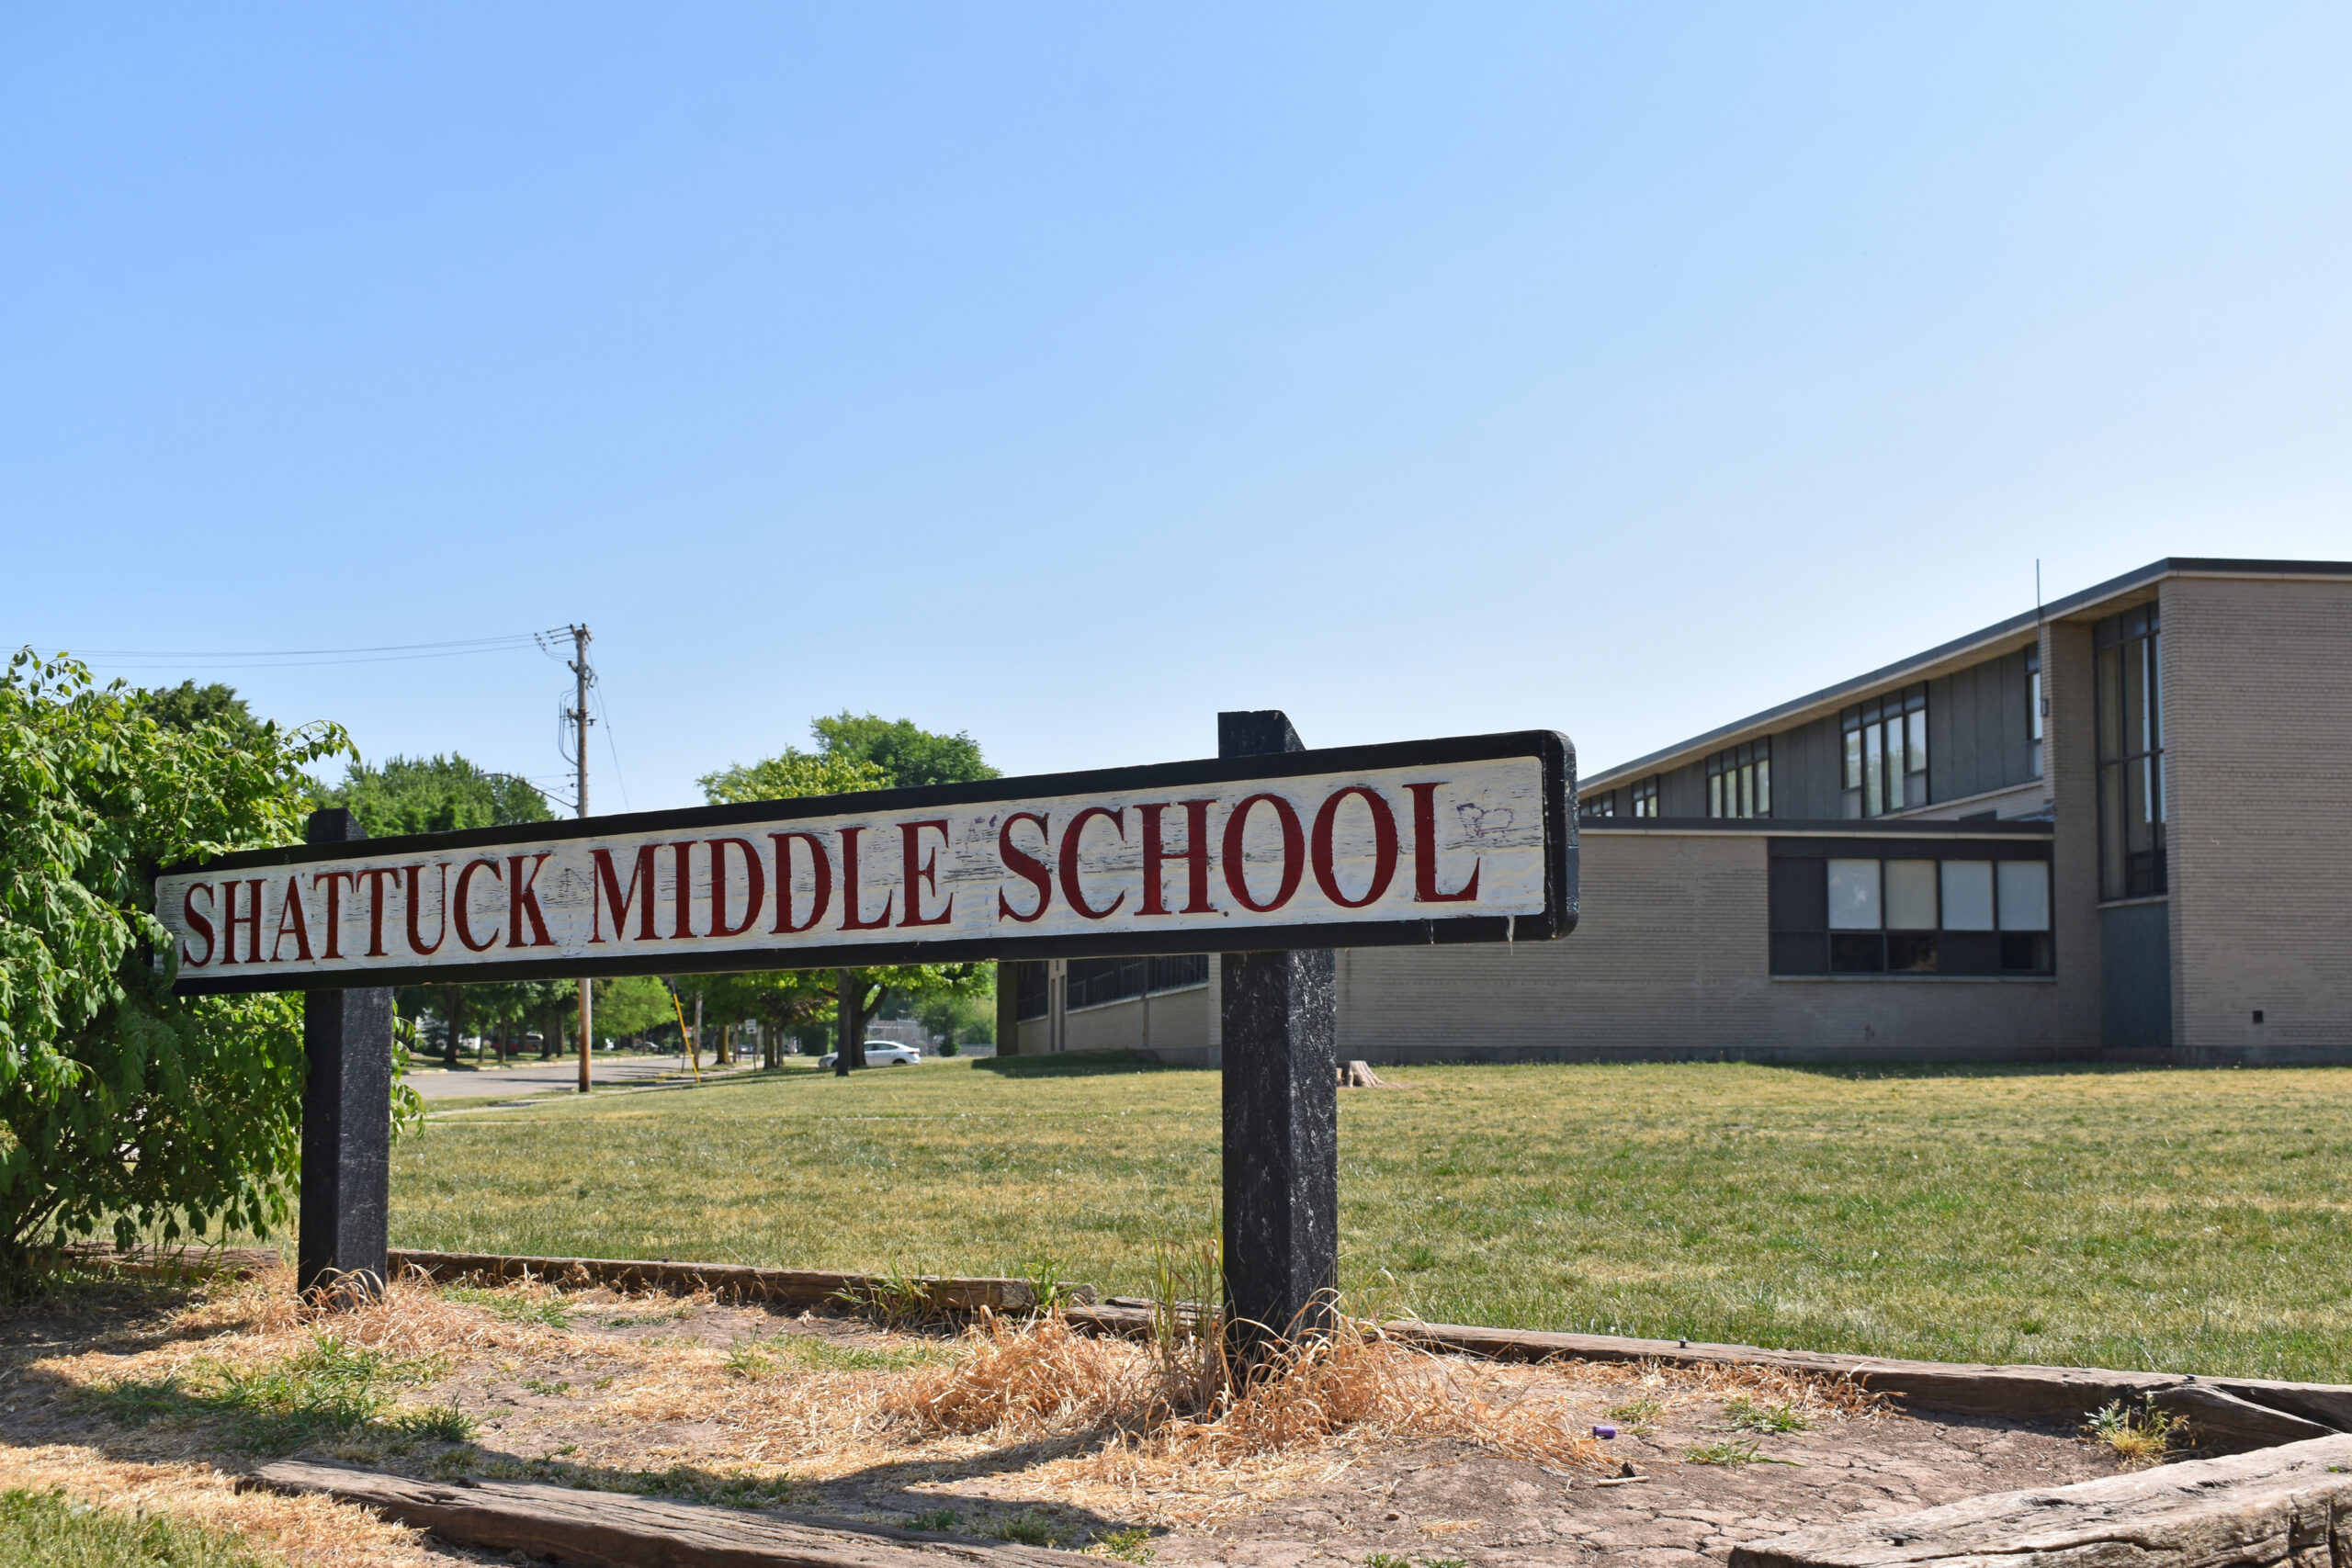 Shattuck Middle School in Neenah, Wisconsin